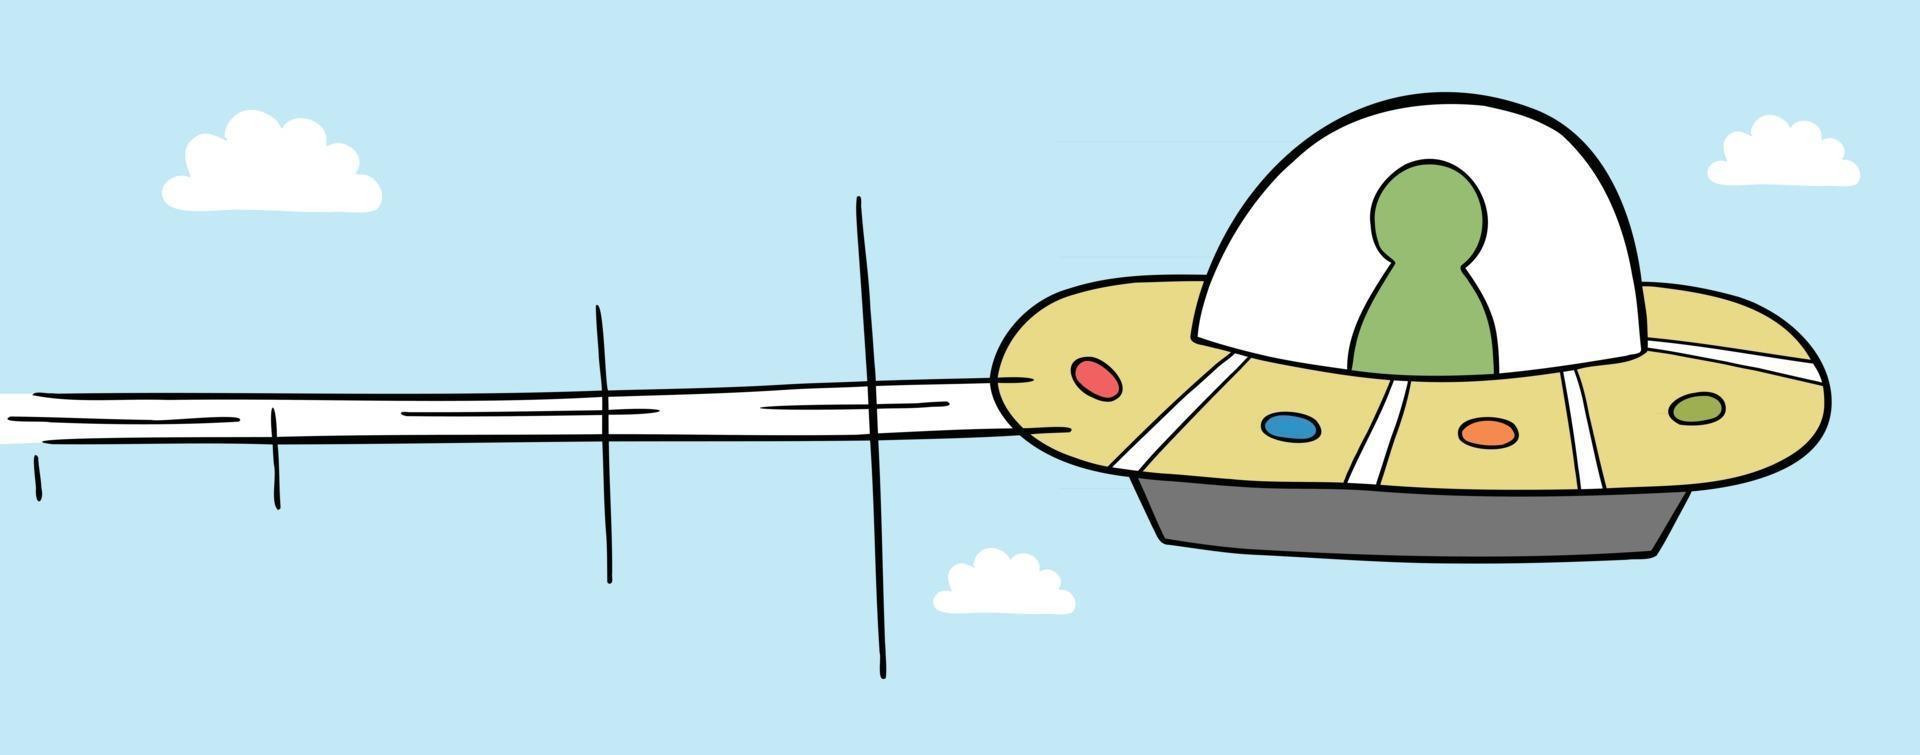 Cartoon Vector Illustration of UFO Flying in the Sky